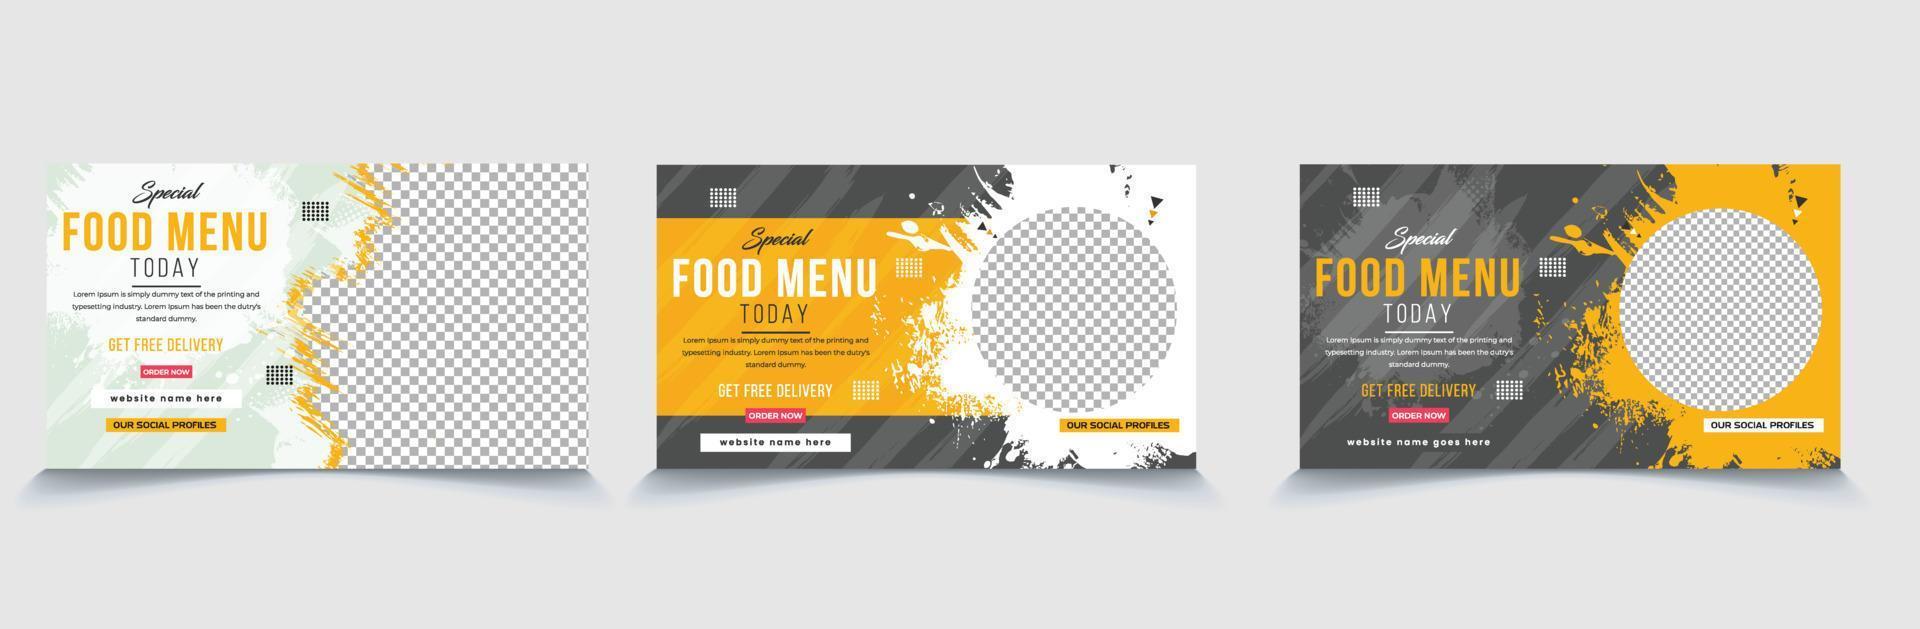 Thumbnail- oder Web-Banner-Design für spezielle Lebensmittelmenüs vektor